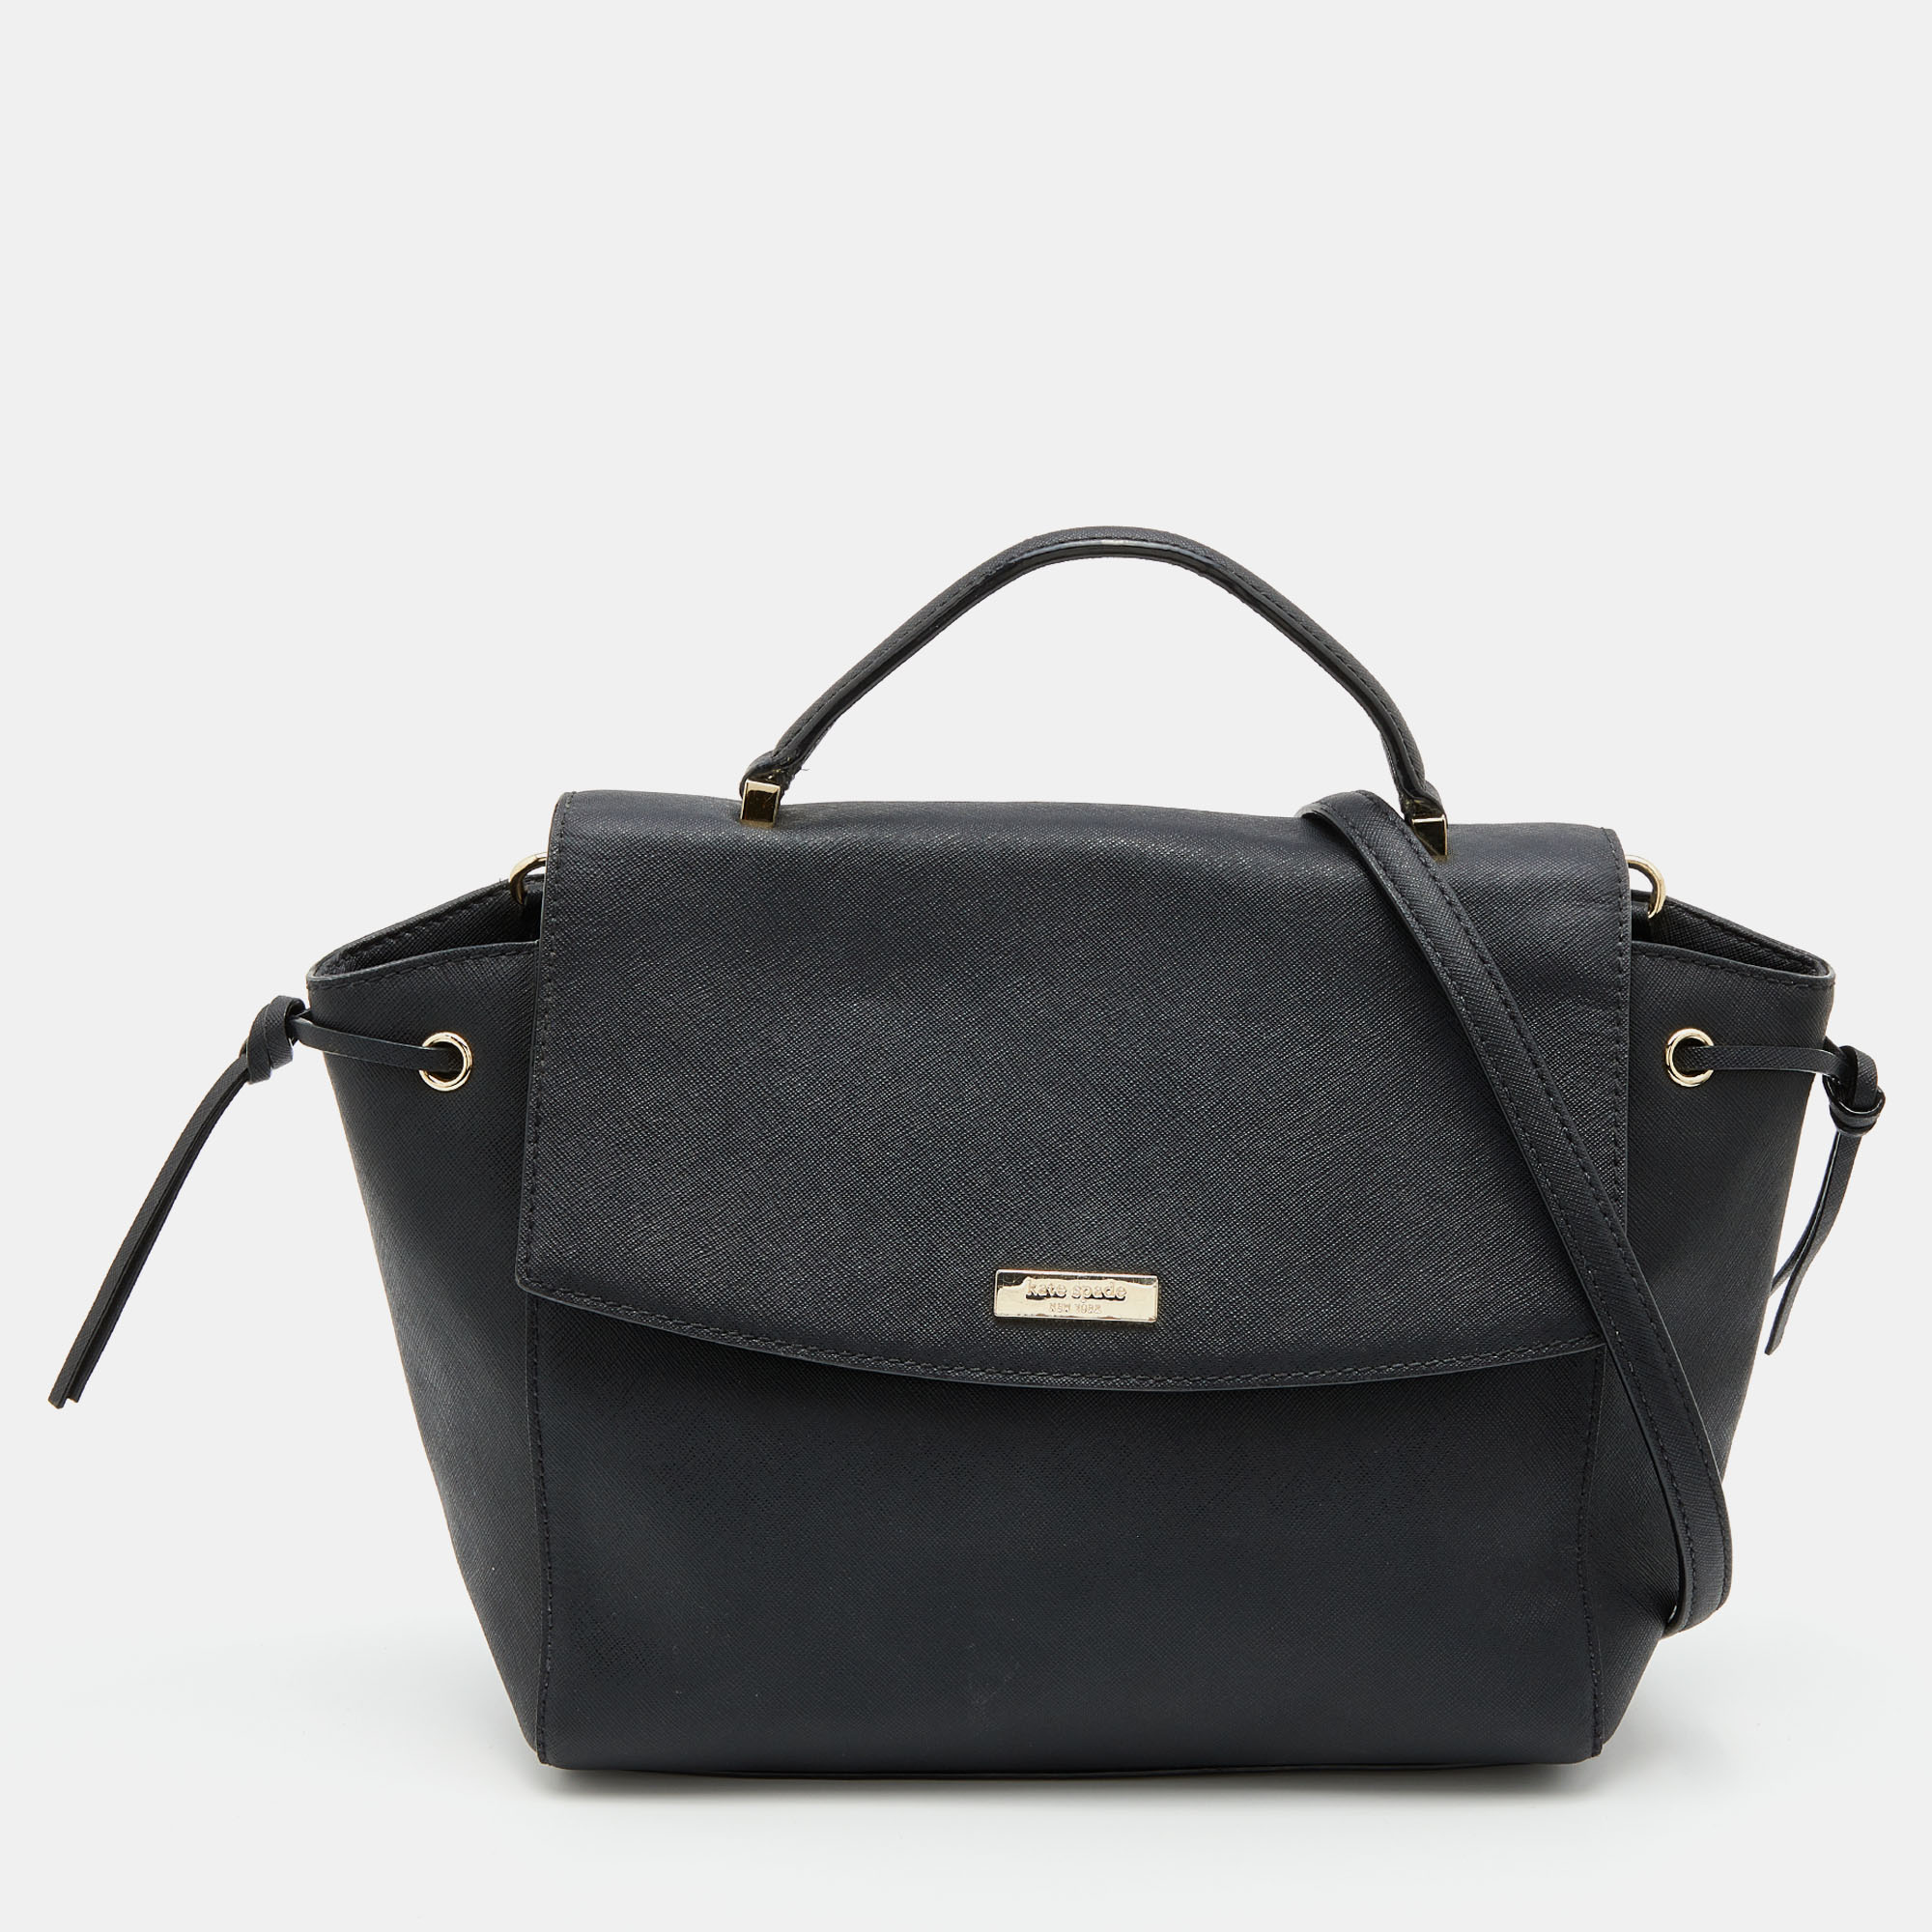 Pre-owned Kate Spade Black Leather Flap Top Handle Bag